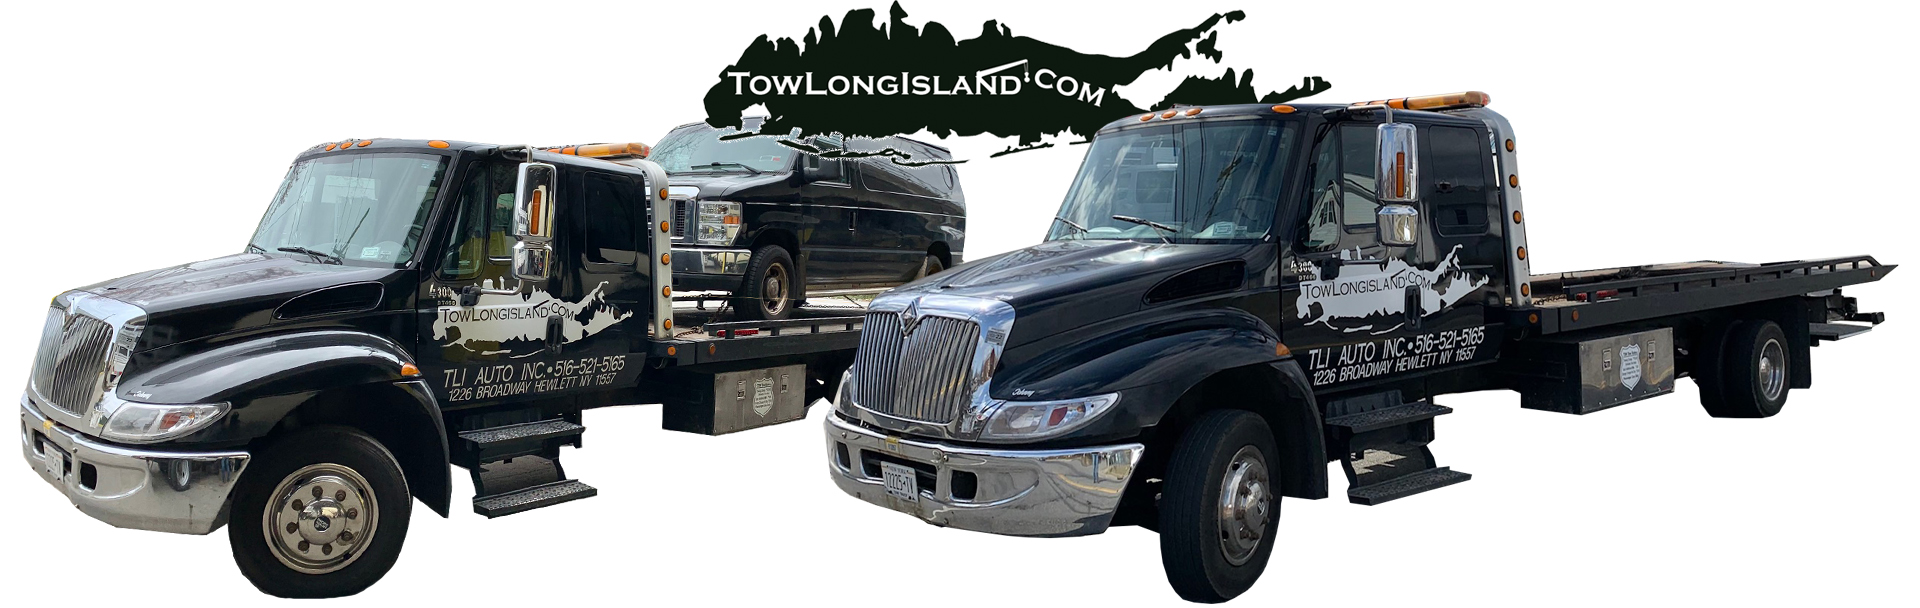 TowLongIsland.com | Tow Truck Professional Services | Merrick, Long Island, New York